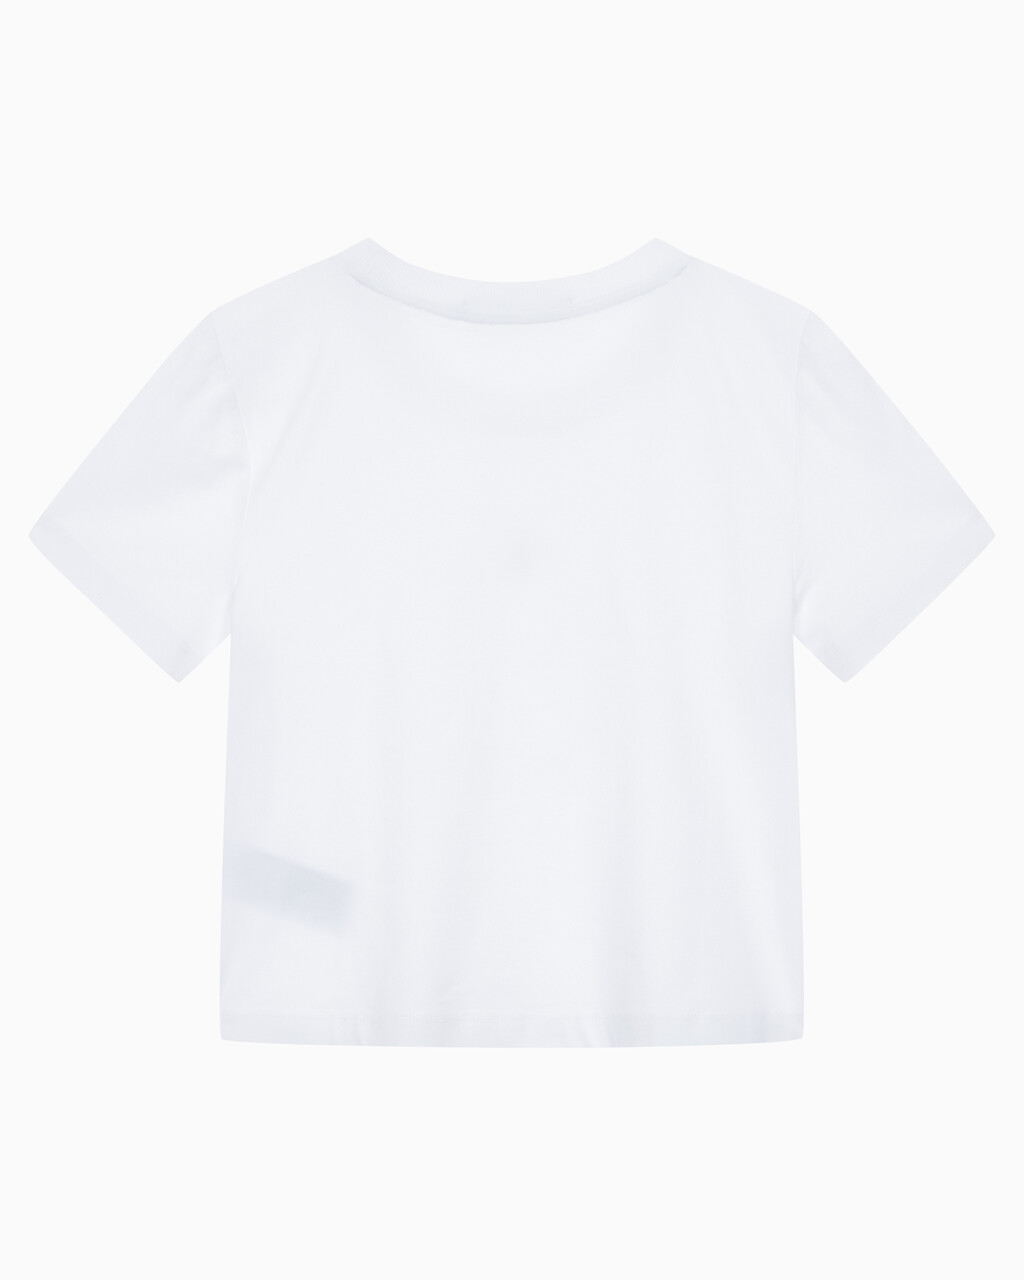 Buy 여성 슬림핏 베이비 크롭 반팔 티셔츠 in color BRIGHT WHITE